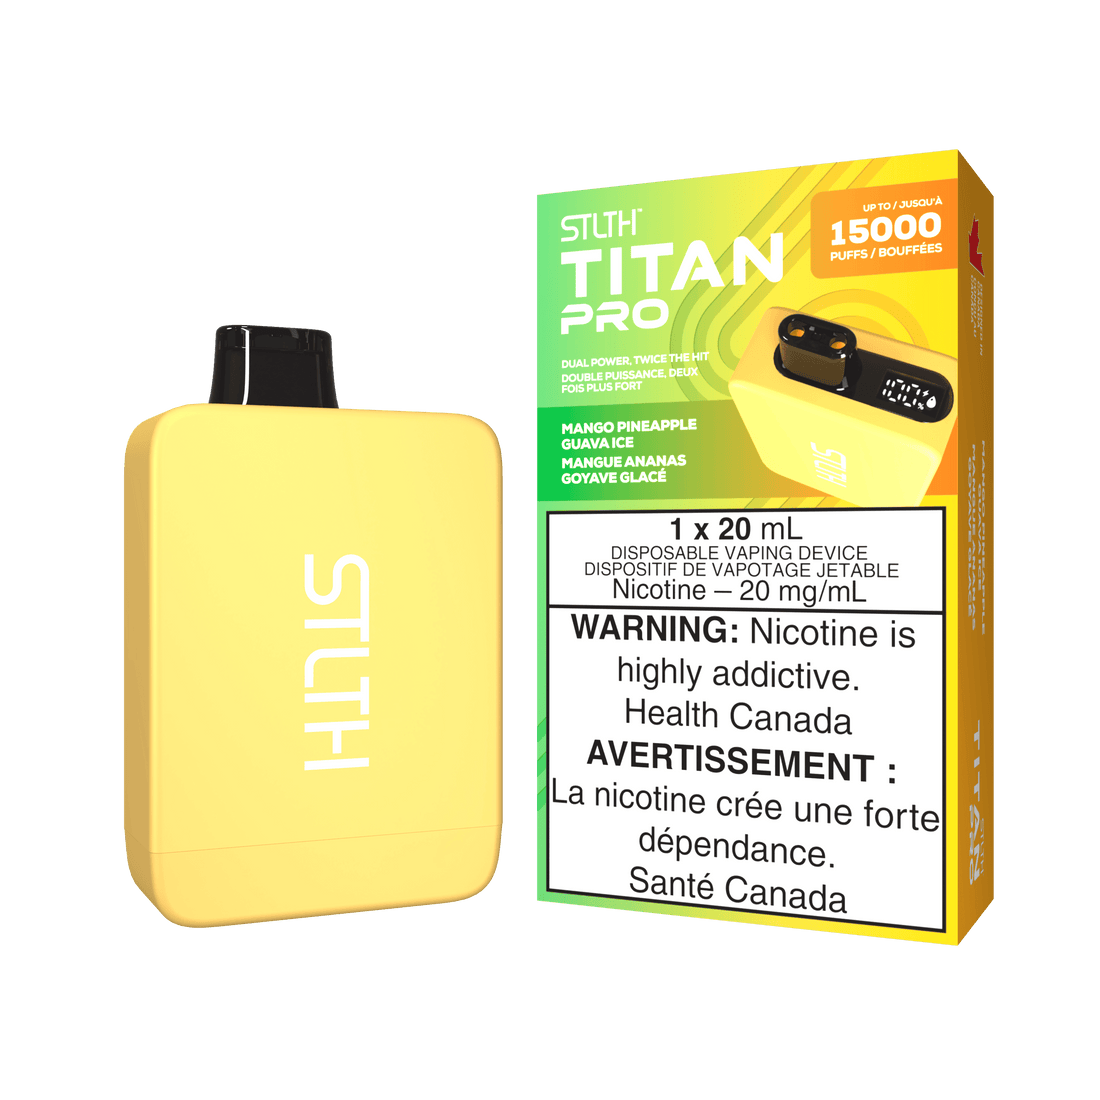 STLTH Titan Pro - Mango Pineapple Guava Ice - Vapor Shoppe